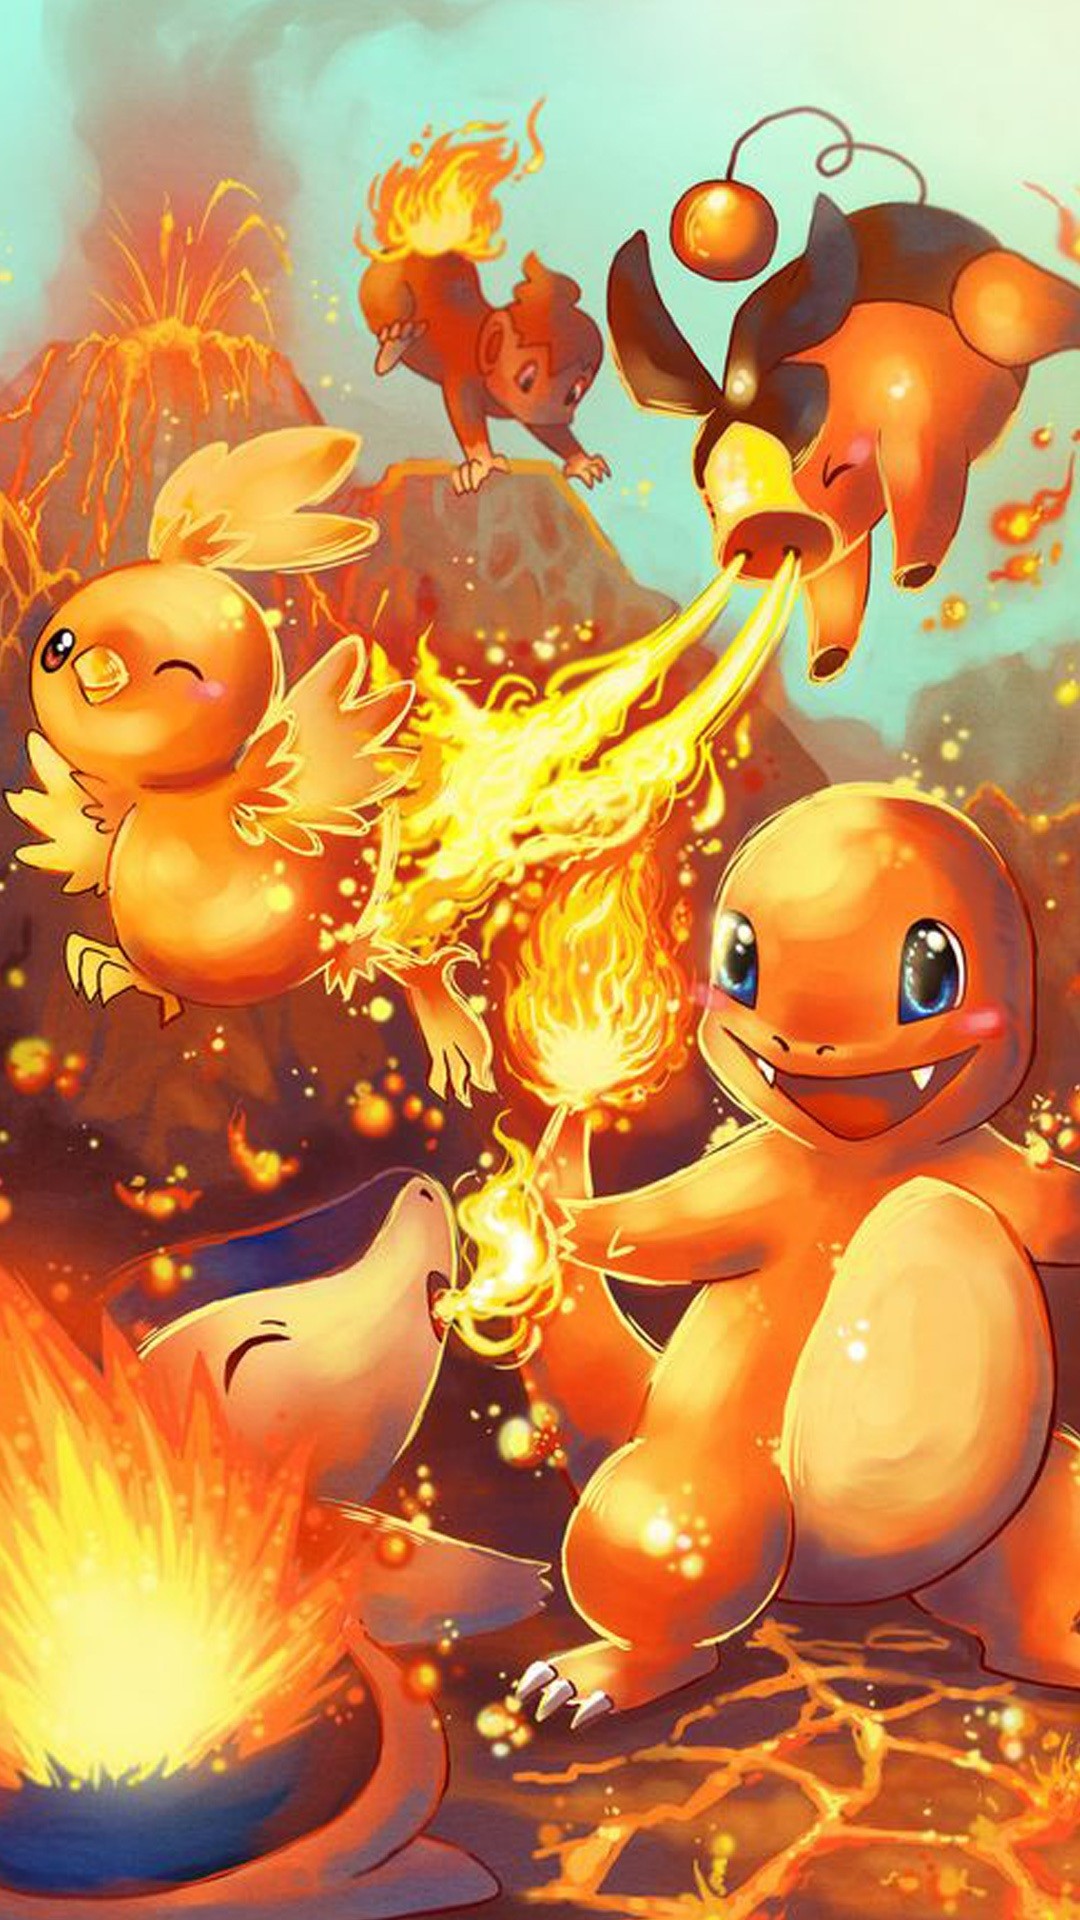 1080x1920 Pokemon Go Charmander fire characters Iphone hd wallpaper